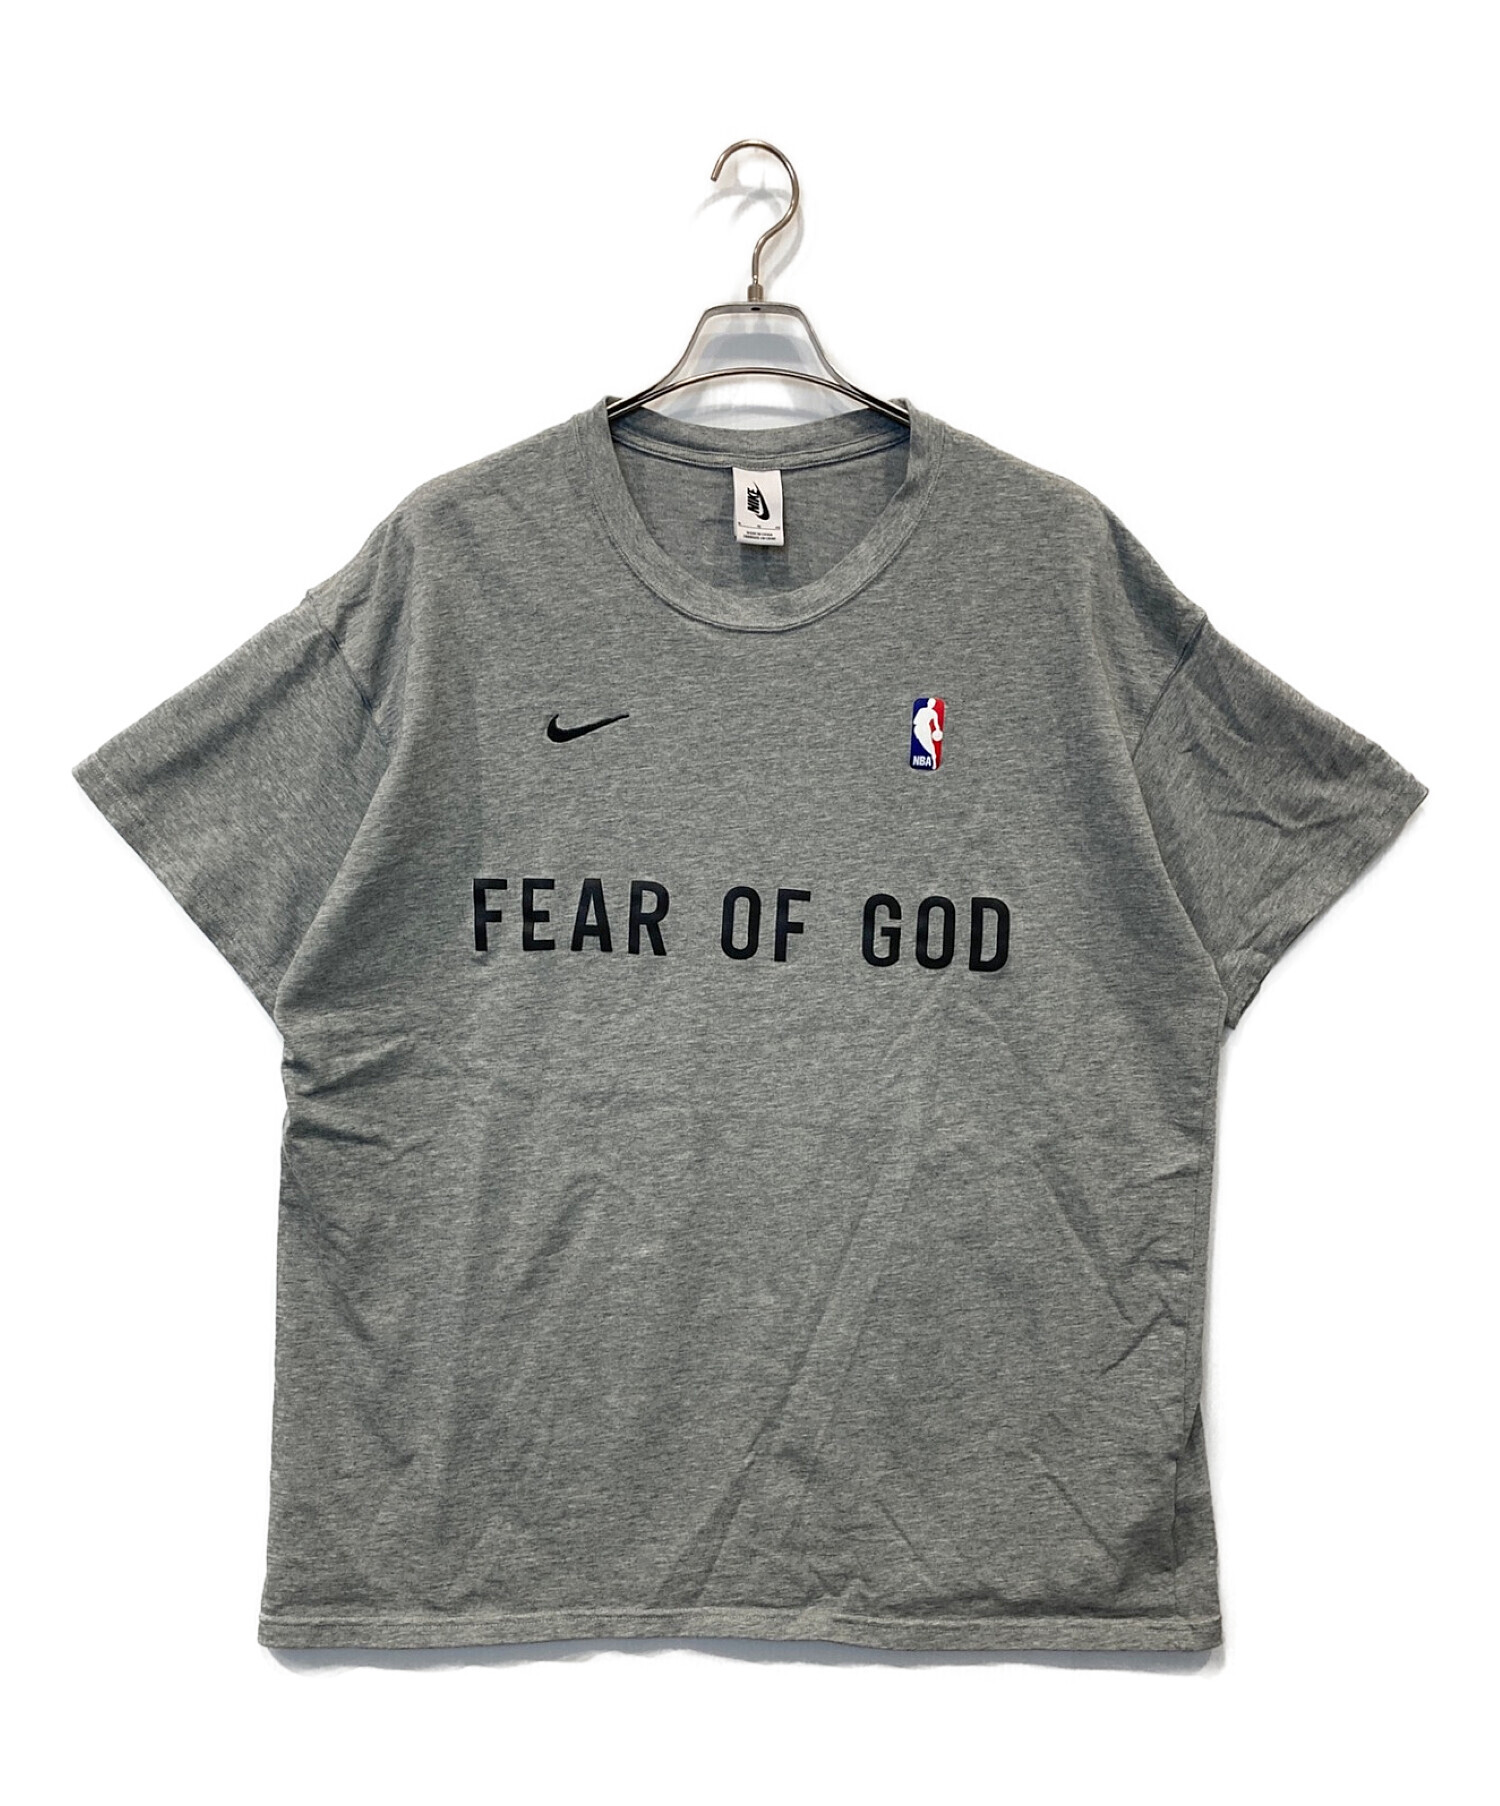 NIKE (ナイキ) Fear Of God (フィア・オブ・ゴッド) NRG W TOP Tシャツ グレー サイズ:XL